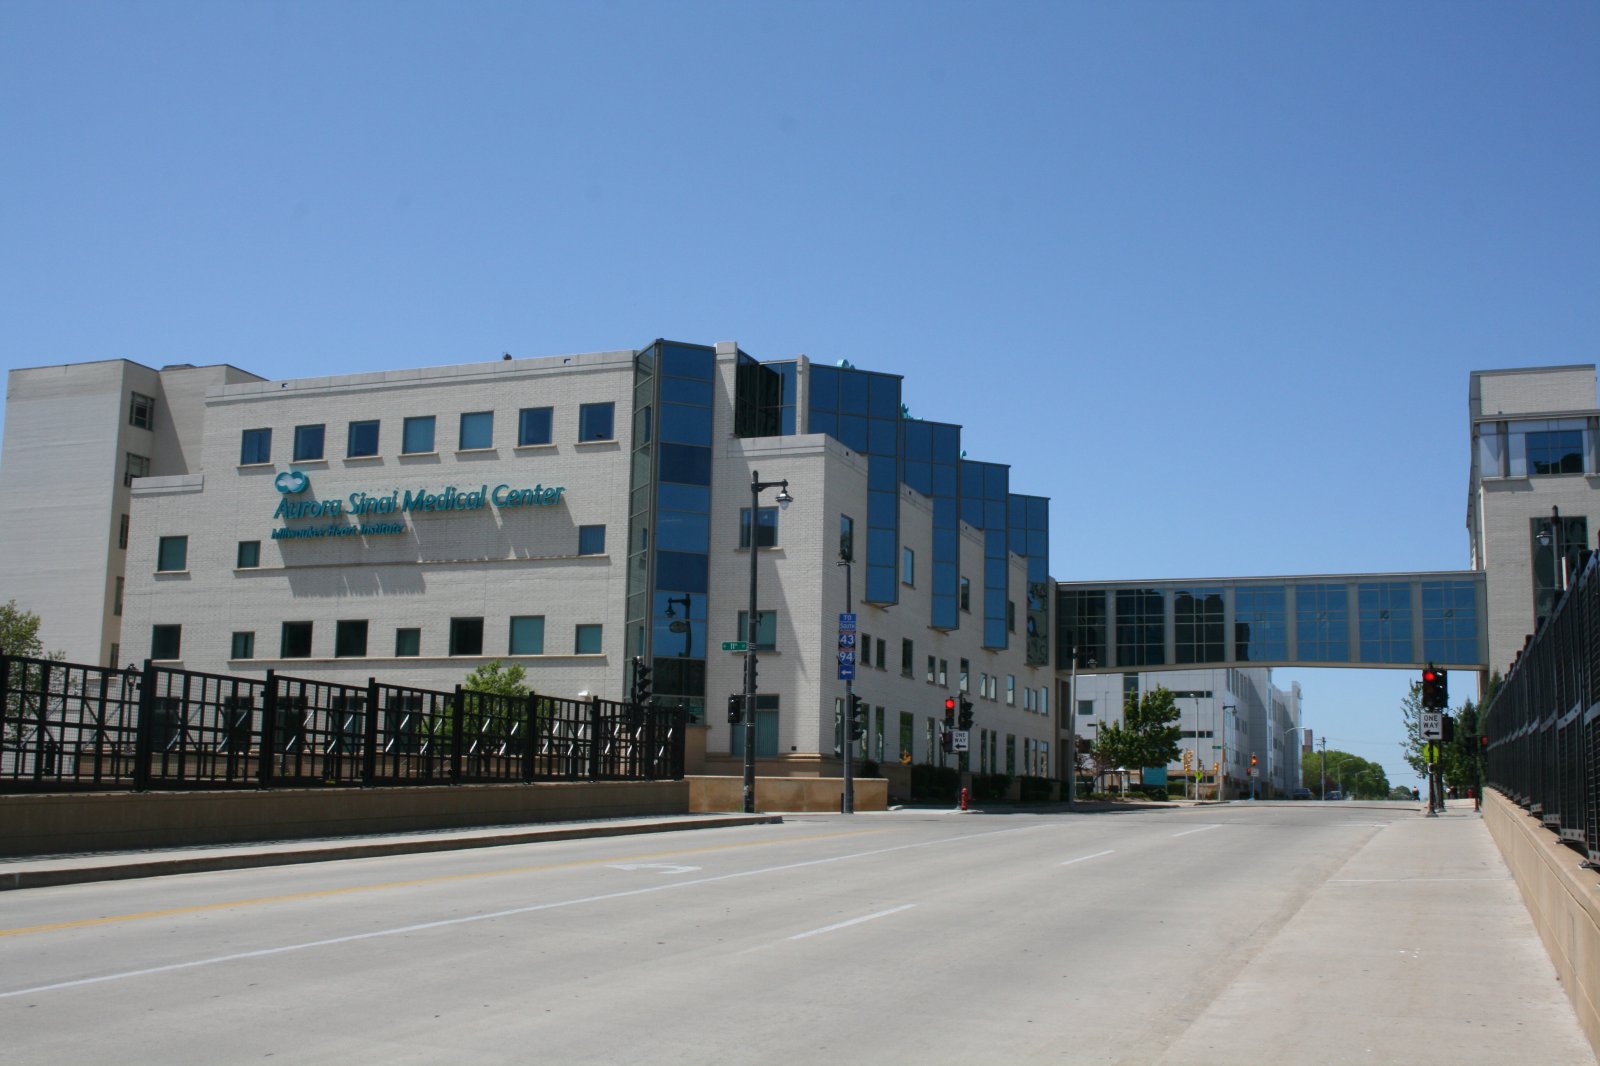 Aurora Sinai Medical Center. Photo taken May 13, 2012 by Jeramey Jannene.